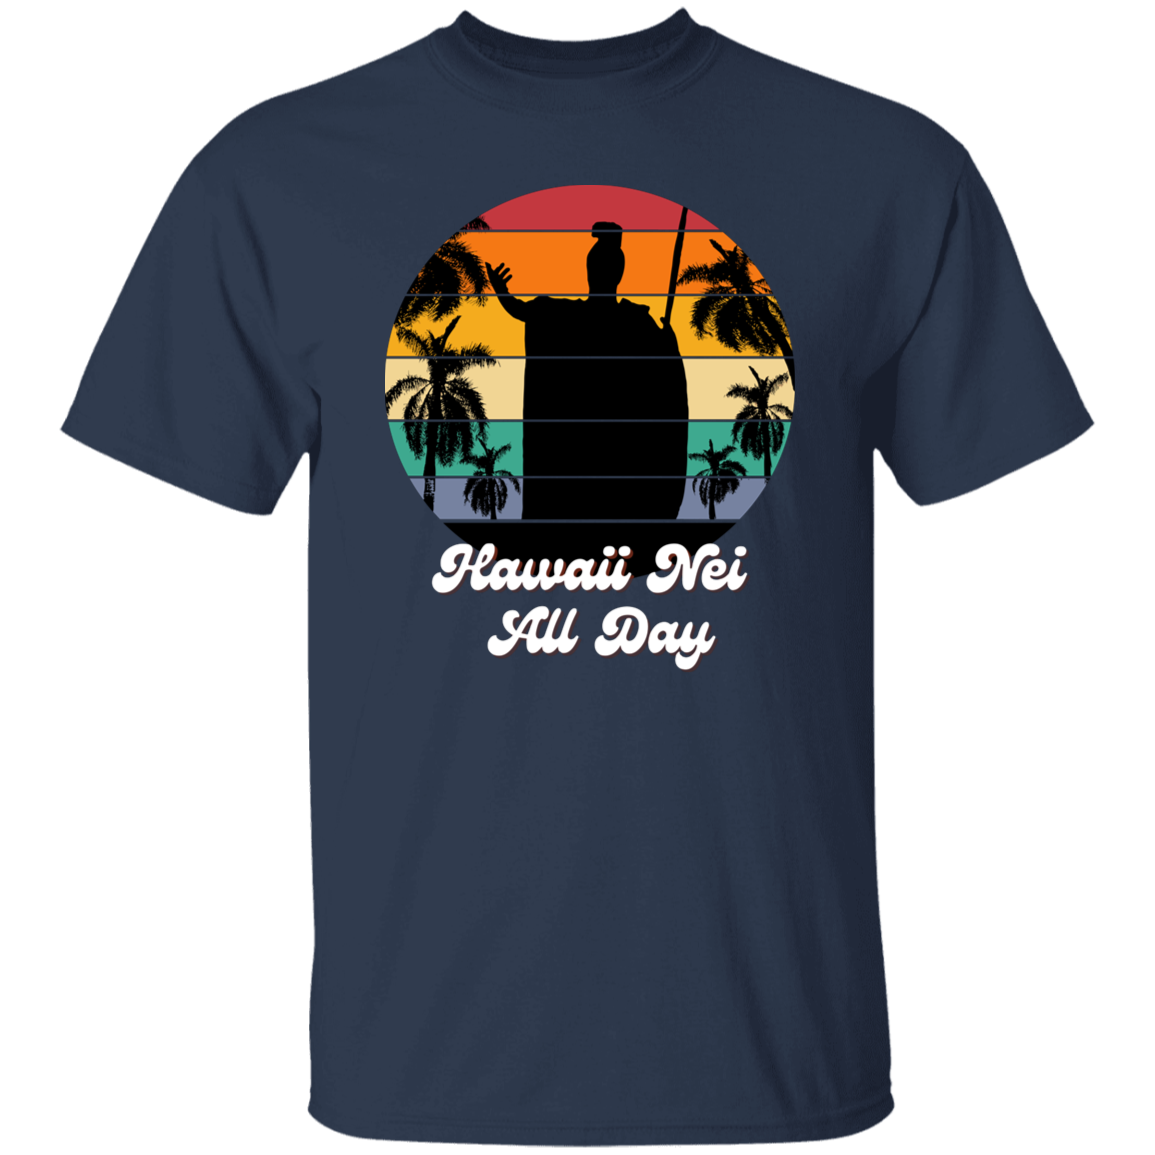 Hawaiian Tropic Retro T-Shirt